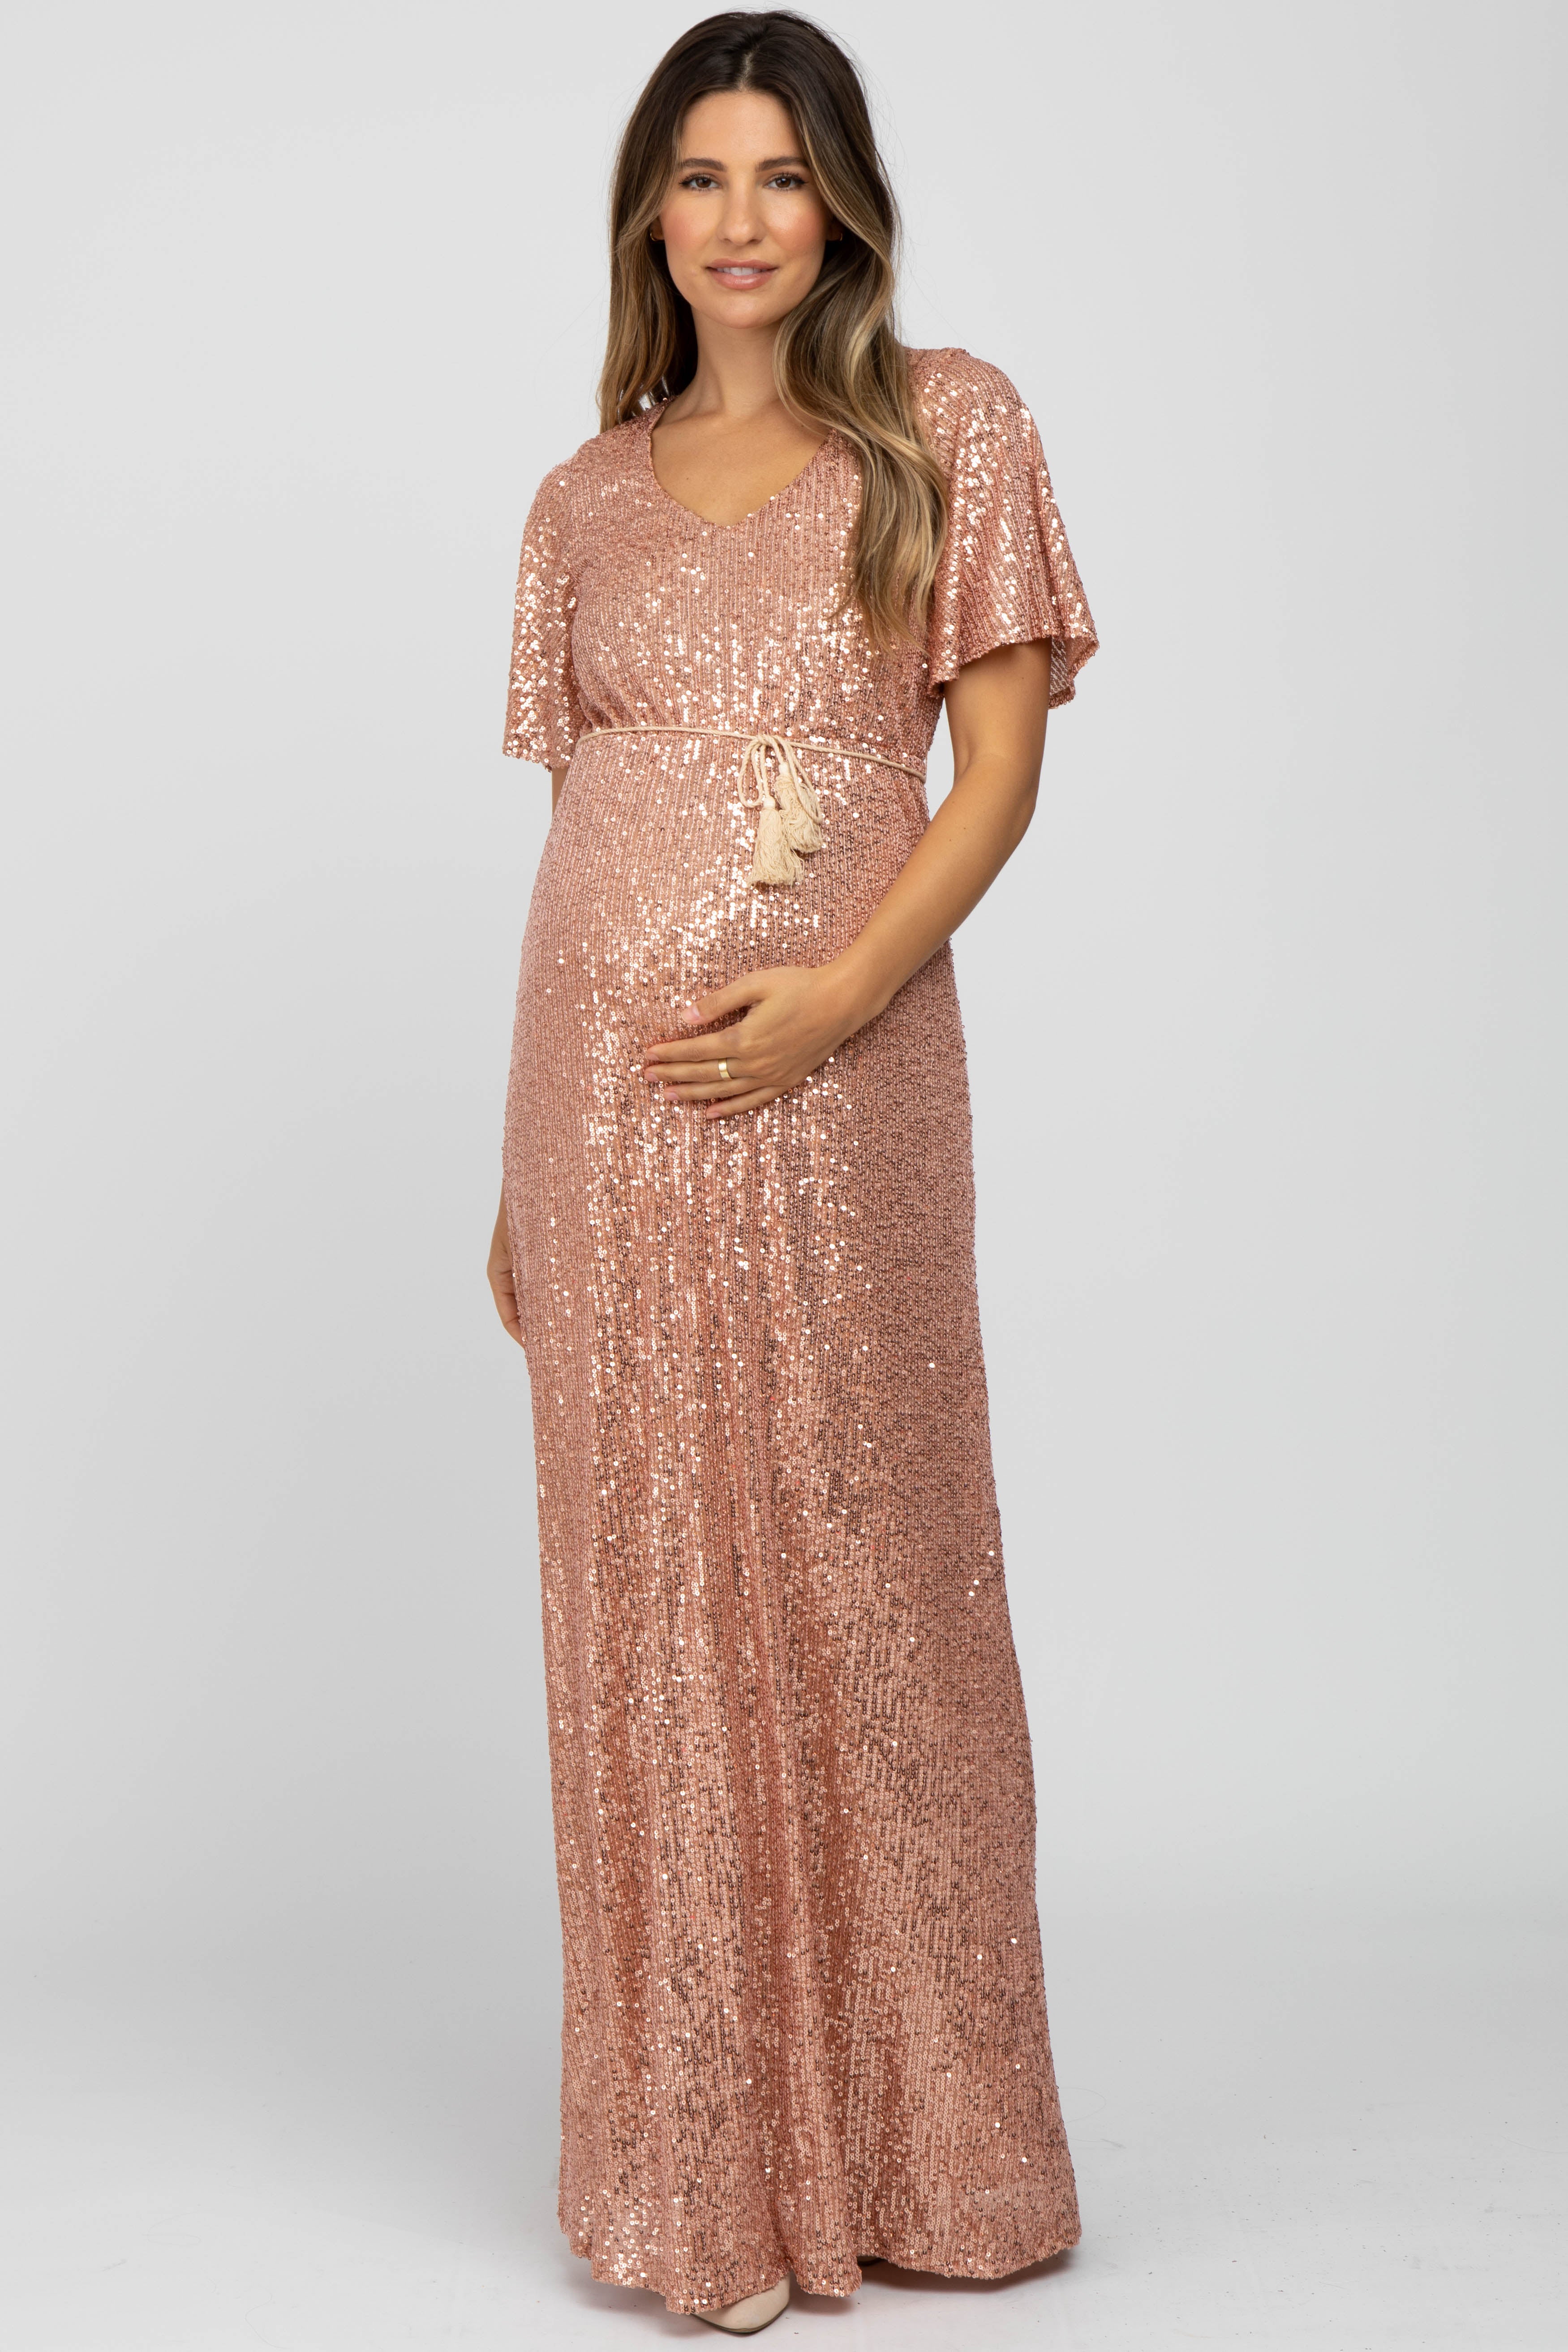 sparkly maternity dress